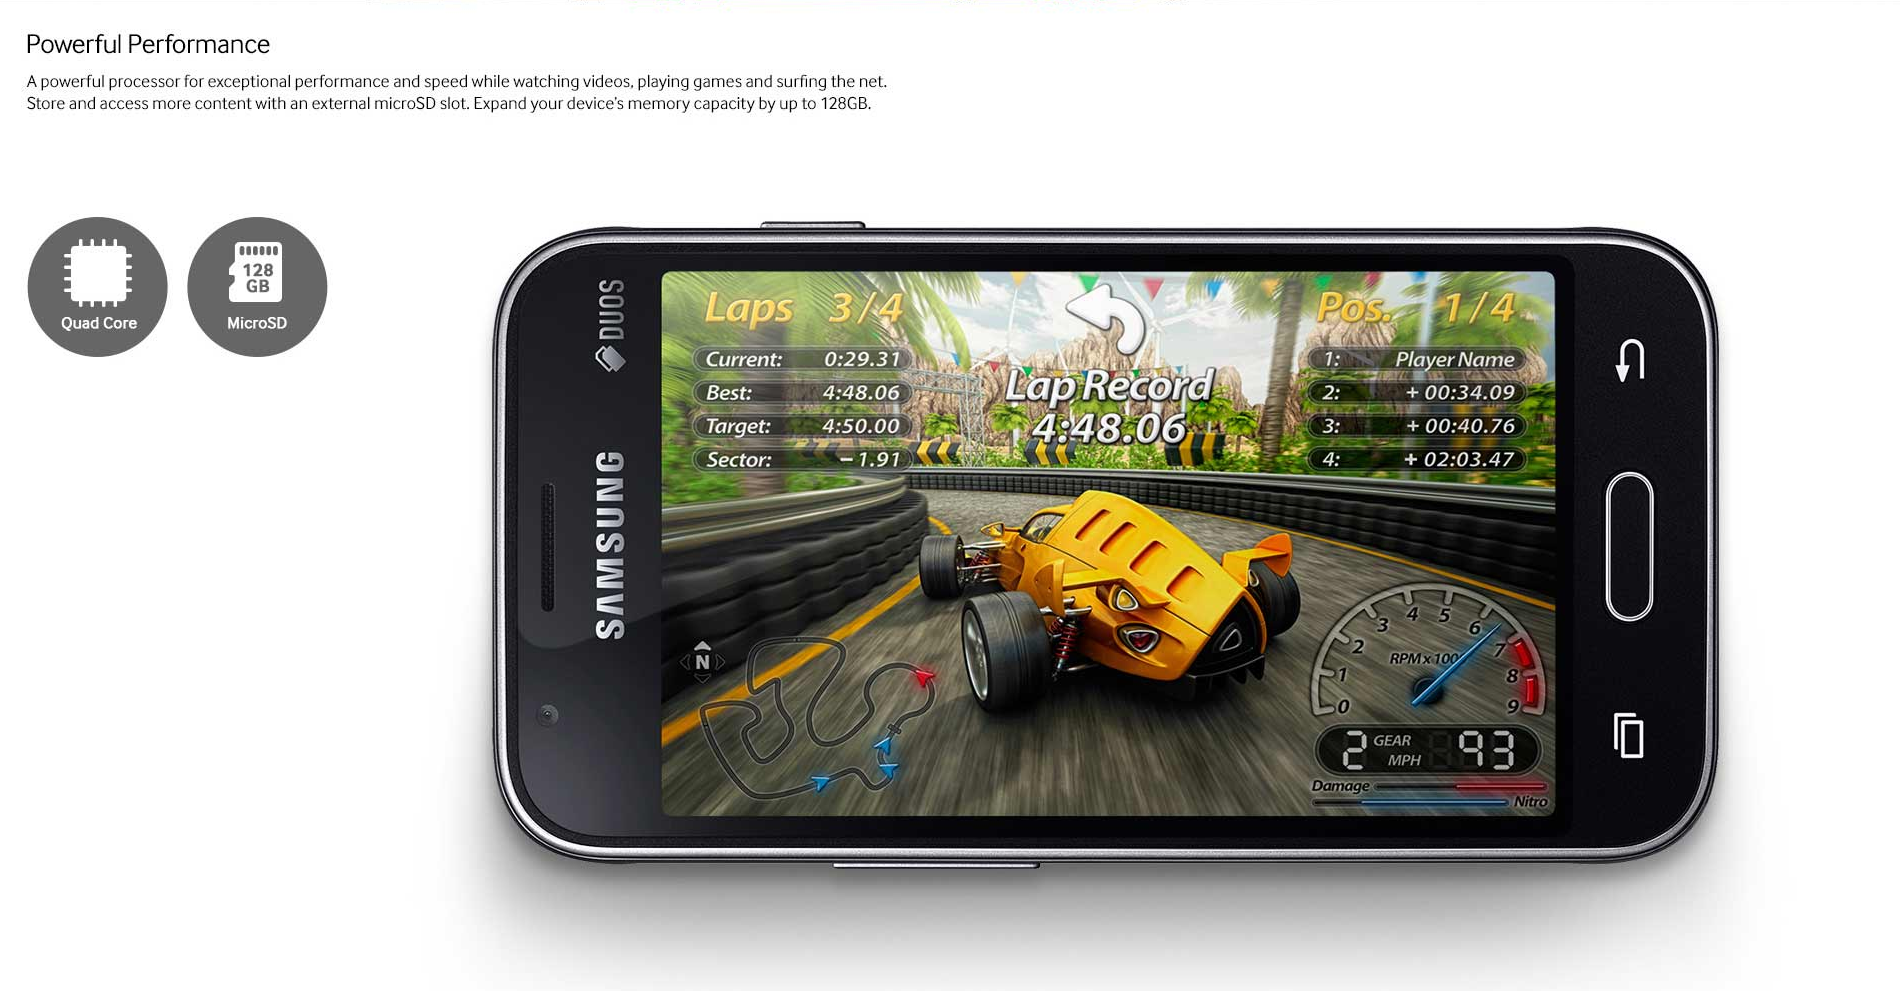 Samsung Galaxy J1 Mini gaming e1457628109504